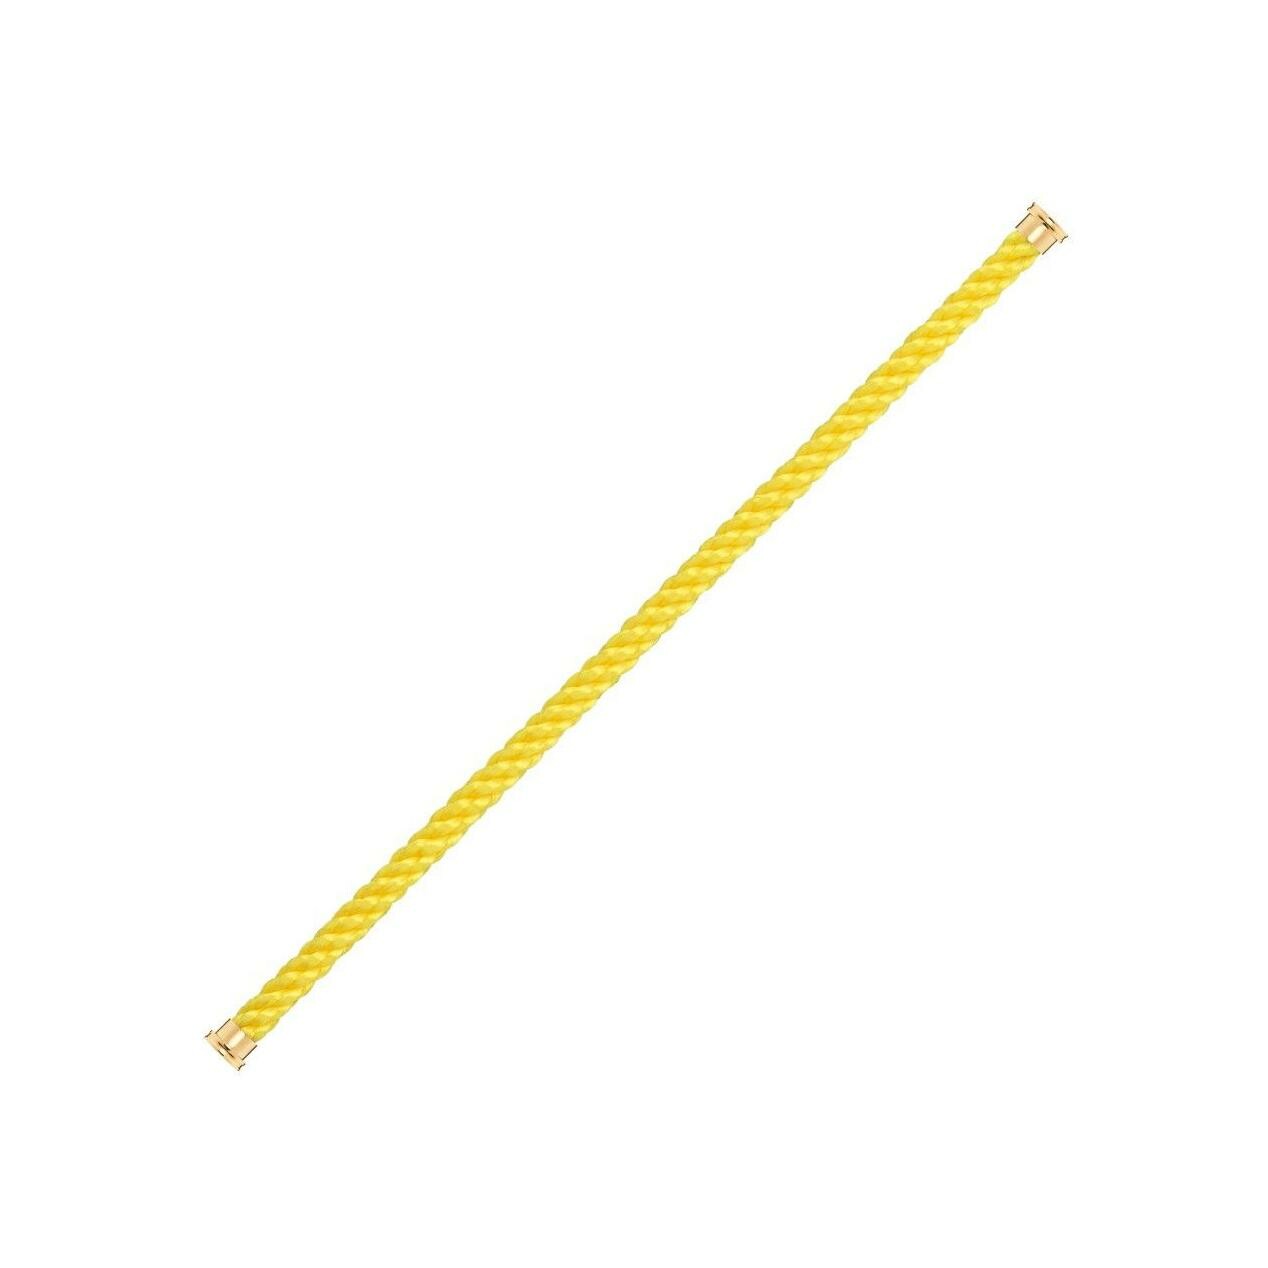 Câble FRED Force 10 GM en corderie jaune fluo vue 1